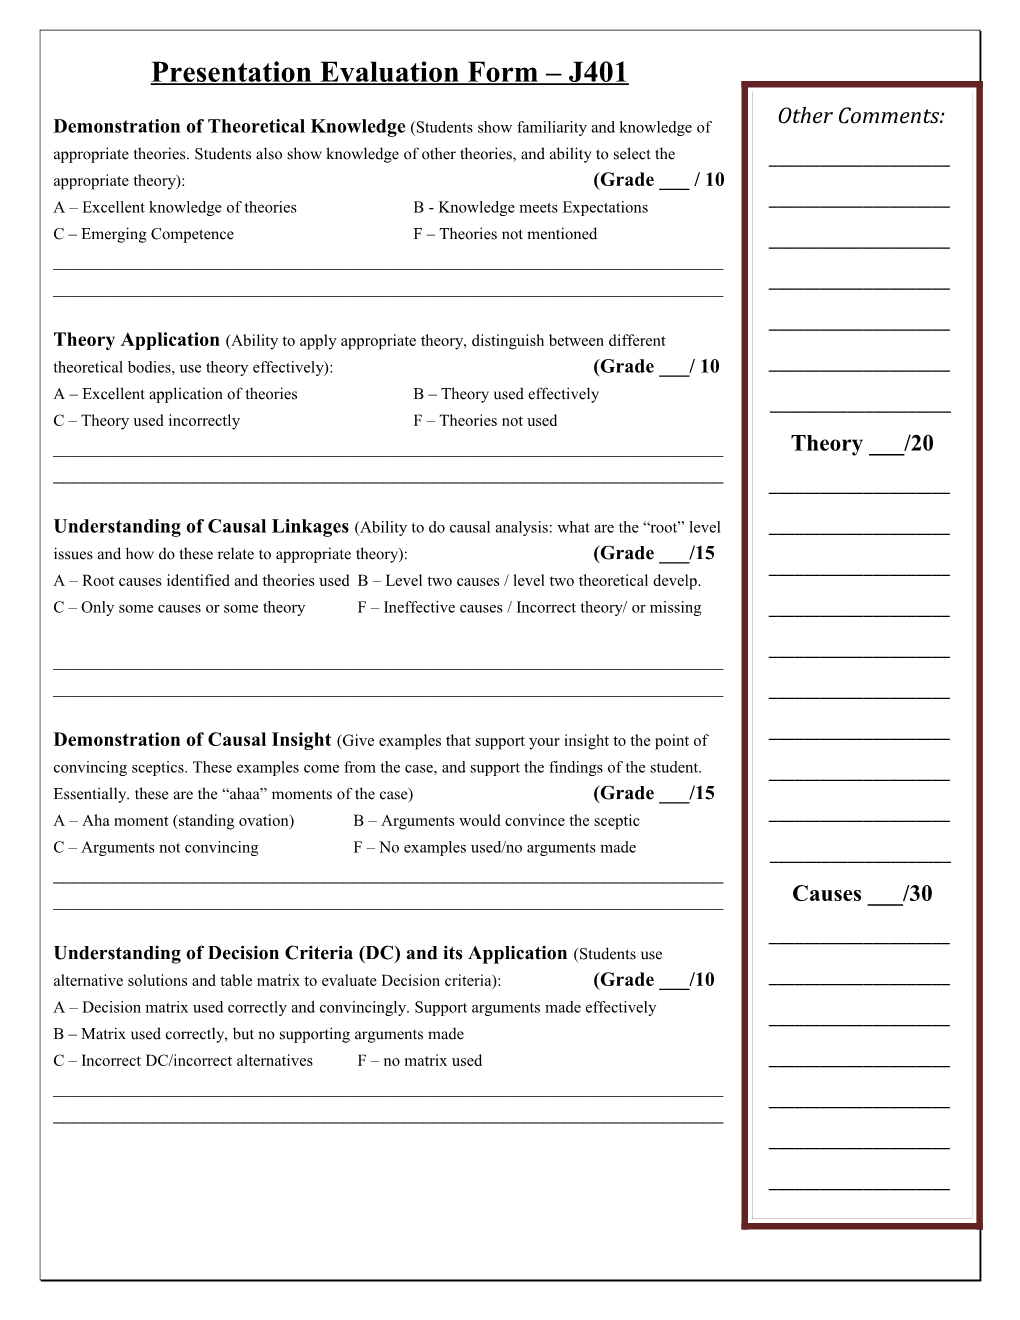 Presentation Evaluation Form Students